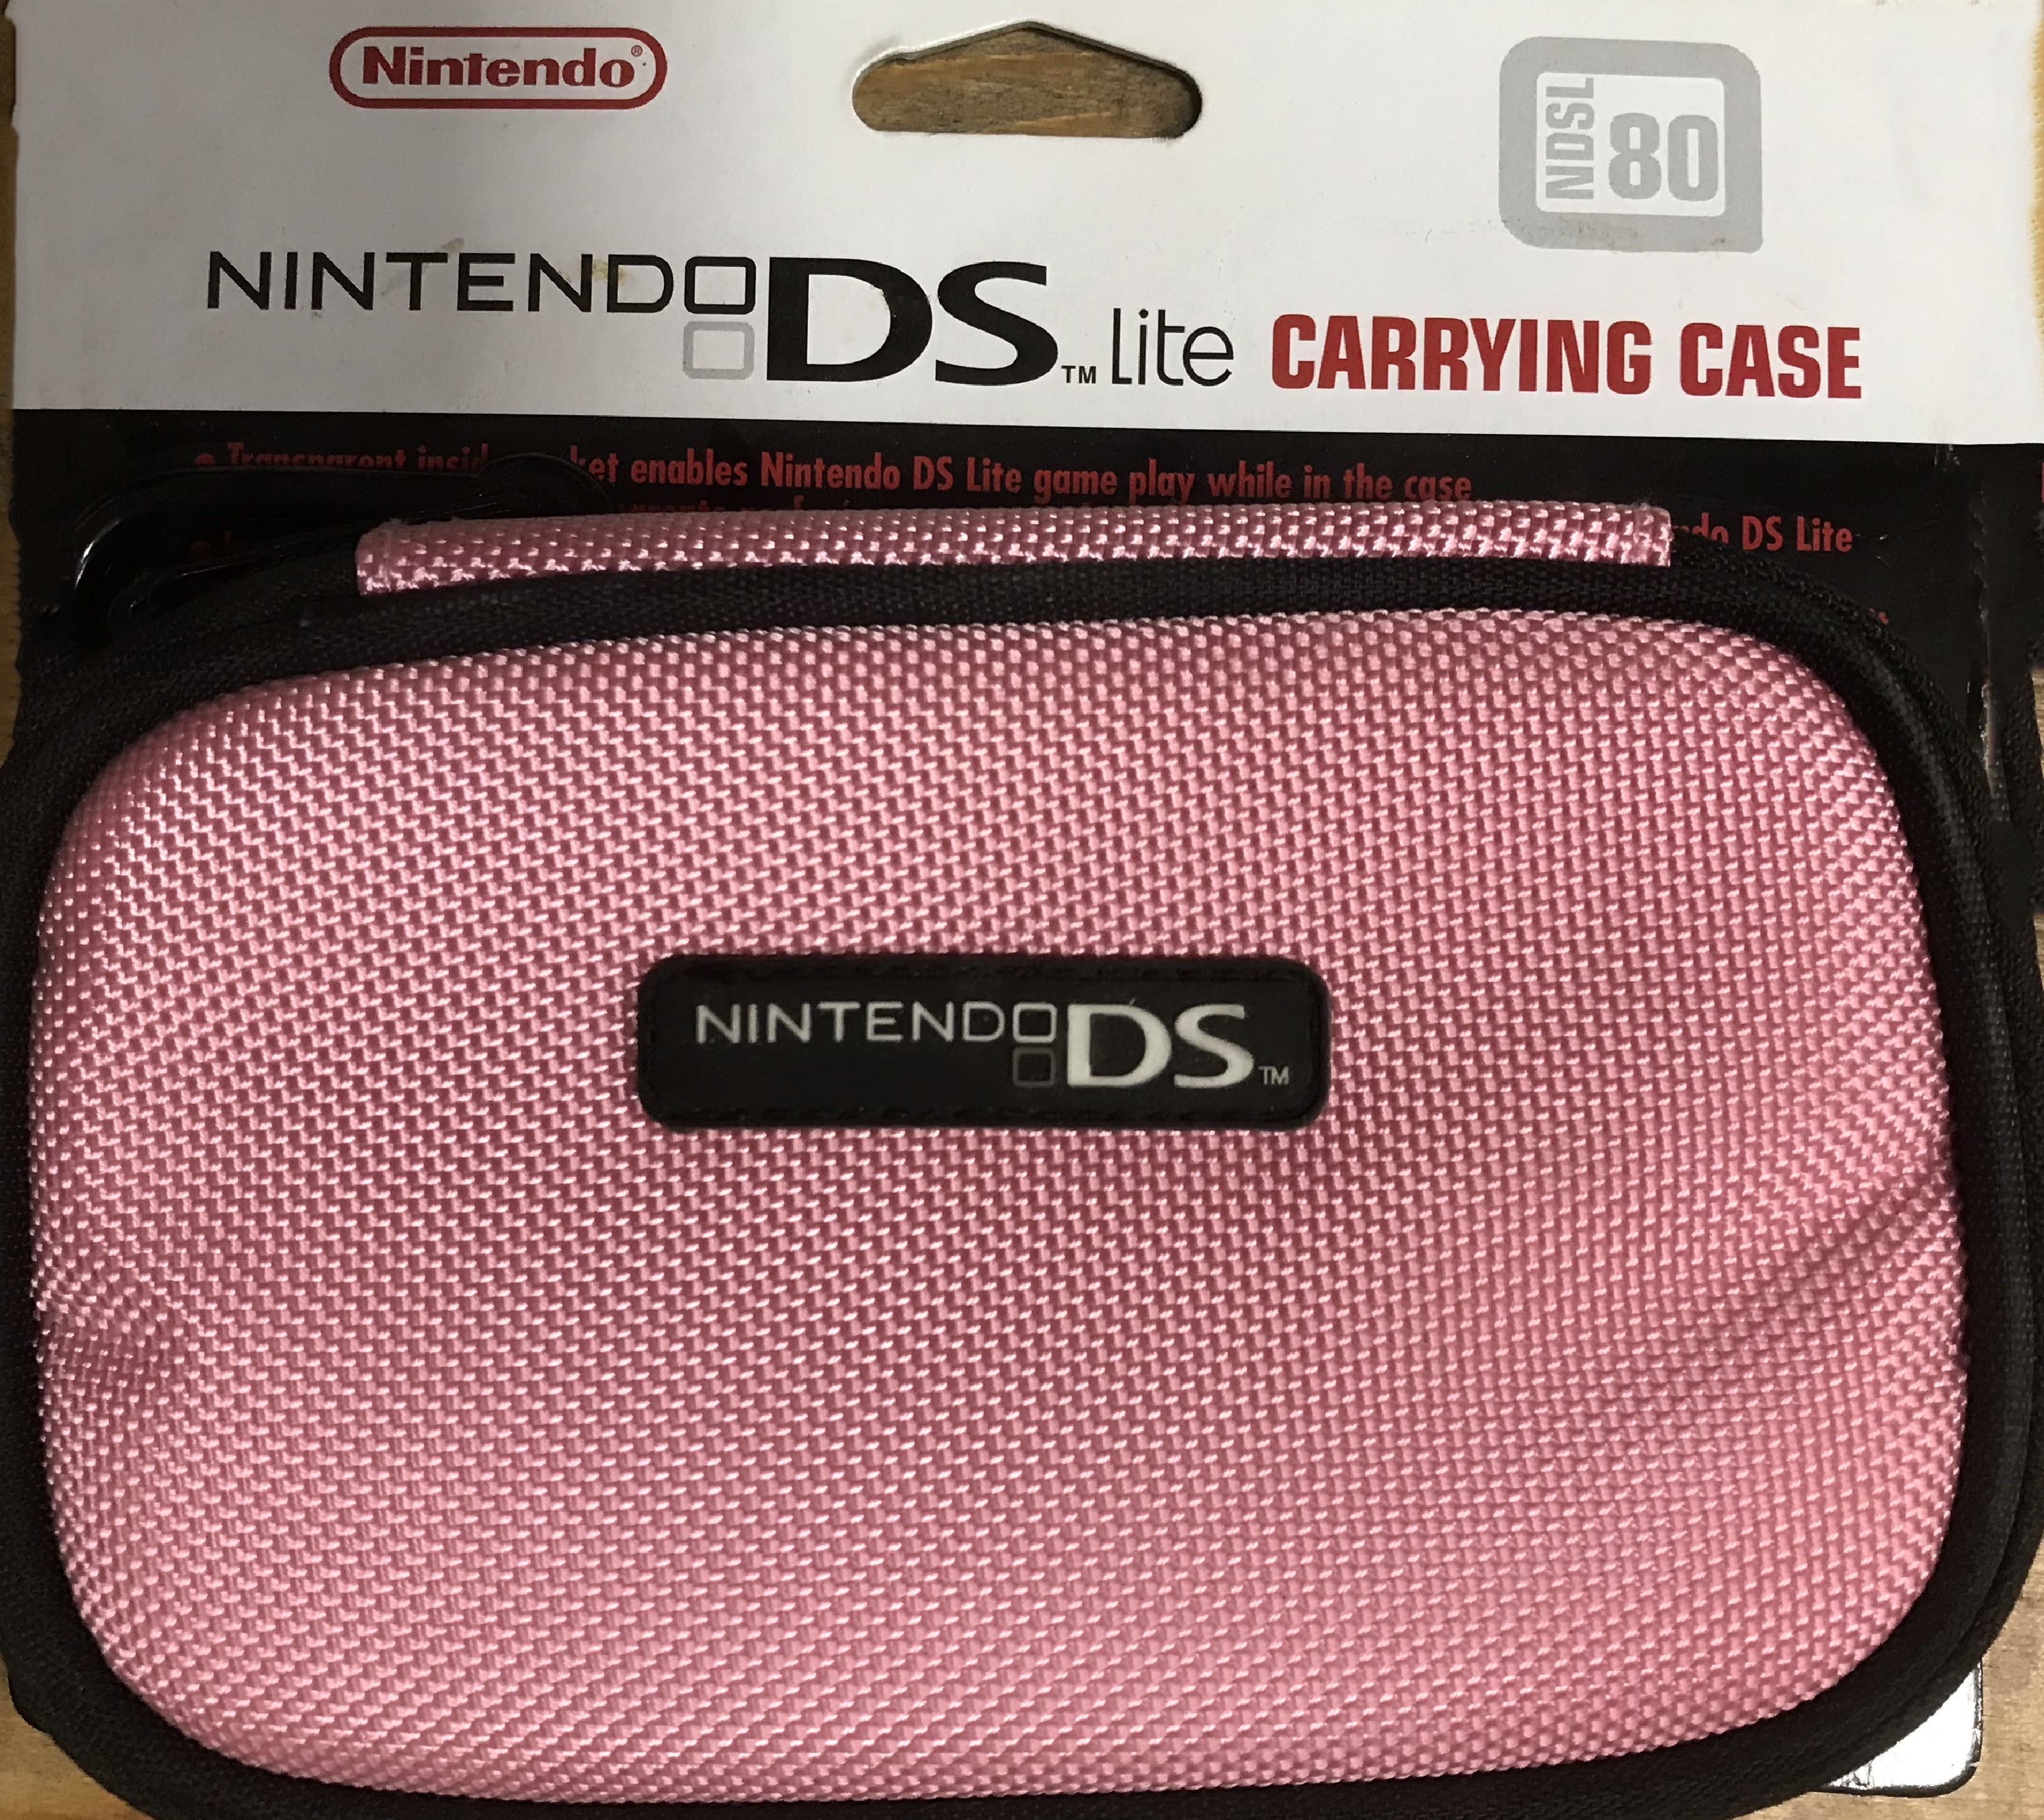 Nintendo DS Light Carrying Case NDSL 80 (Rózsaszín)